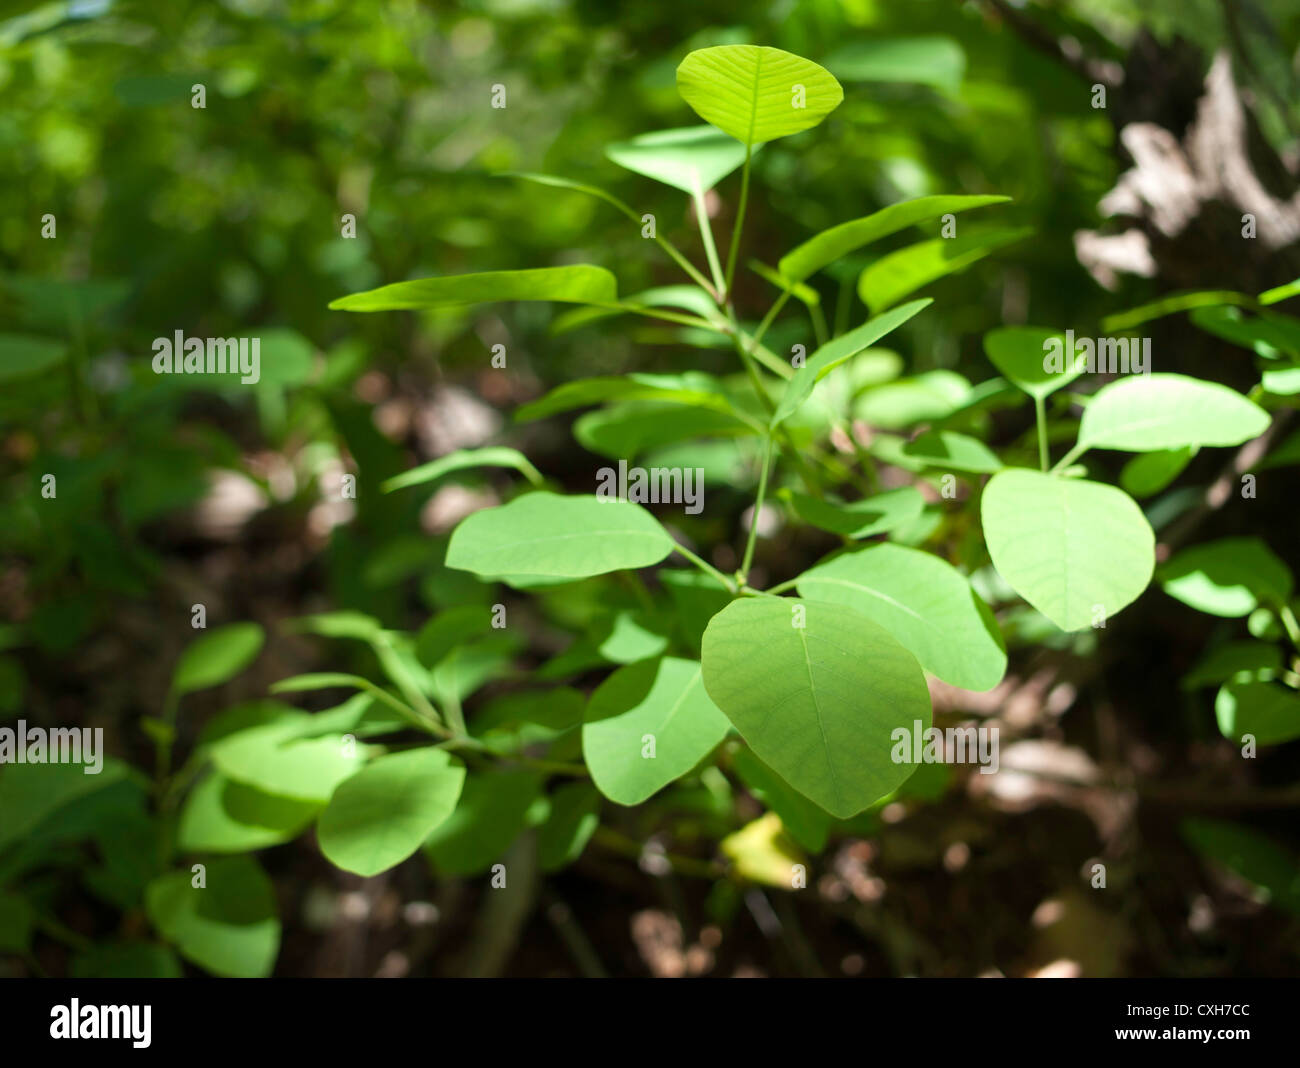 Impianto soleggiato leafs Foto Stock